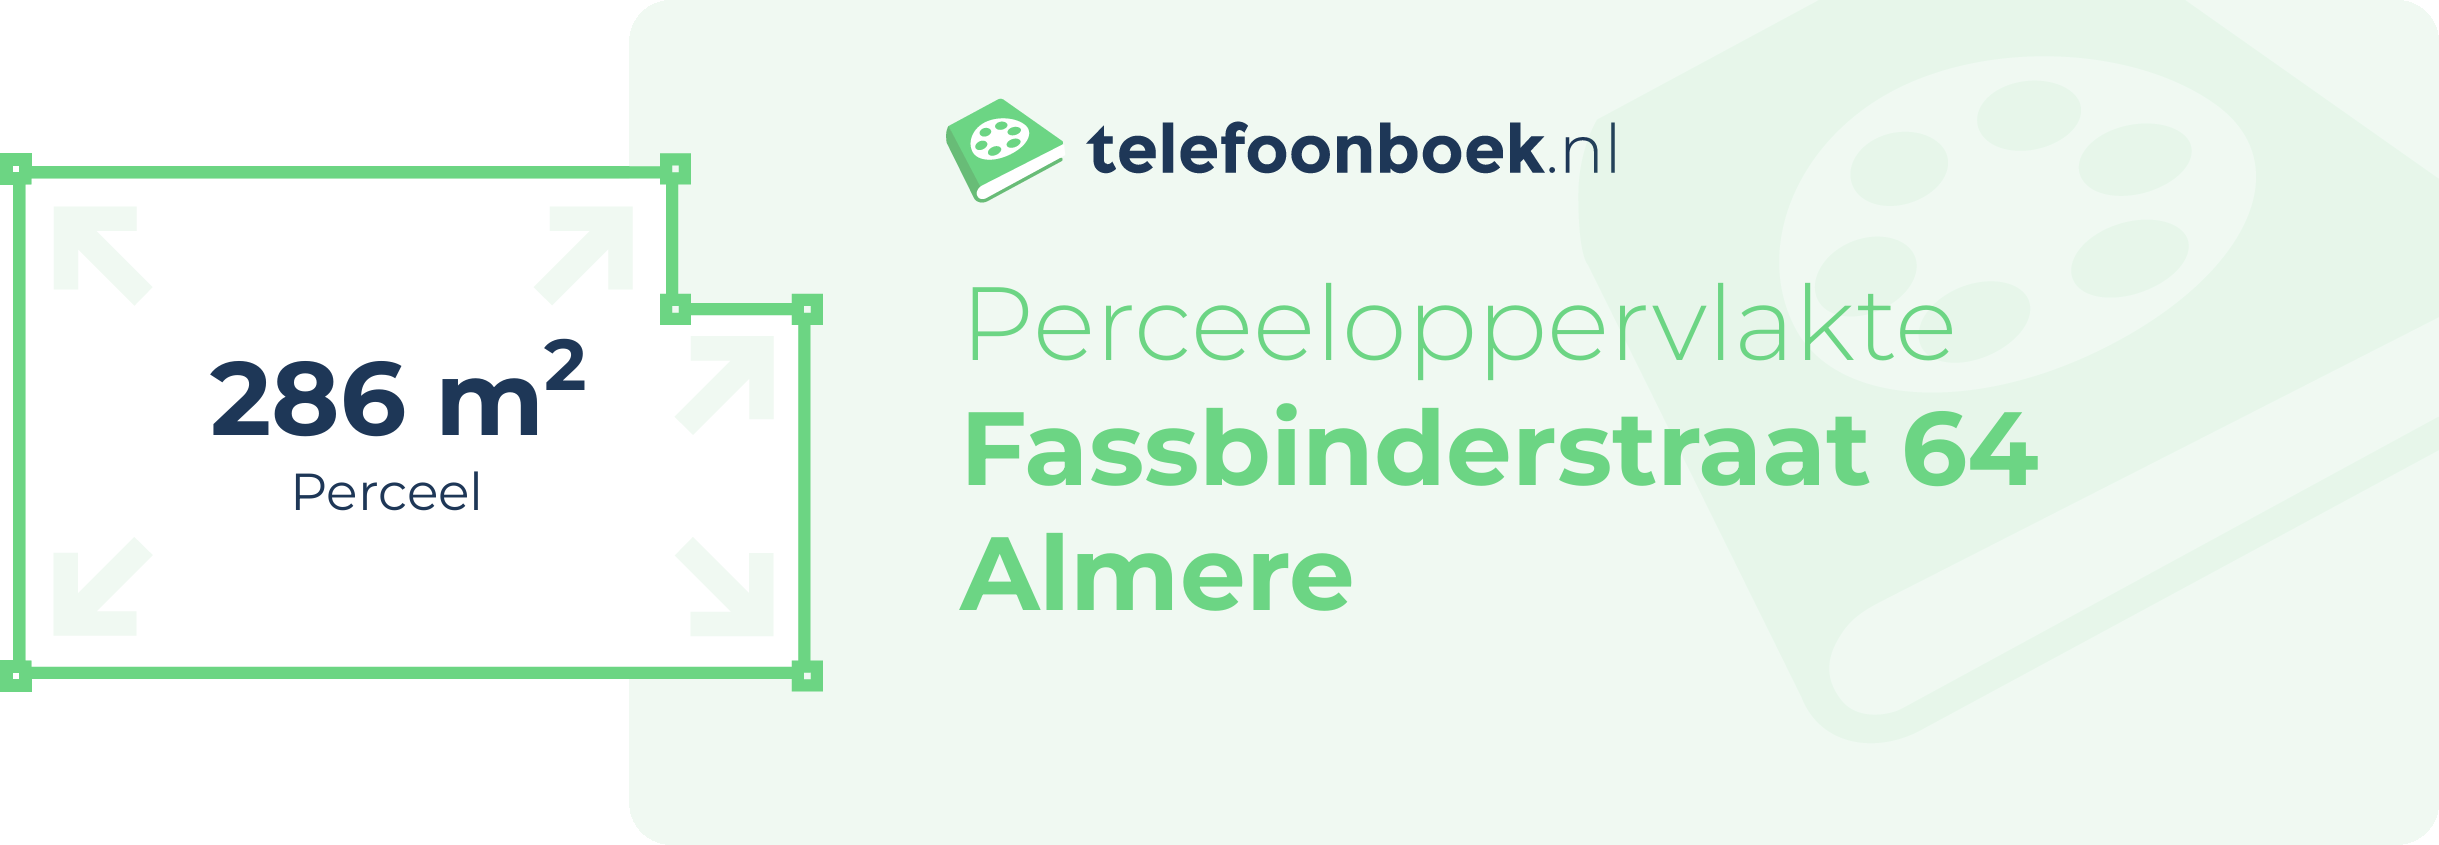 Perceeloppervlakte Fassbinderstraat 64 Almere